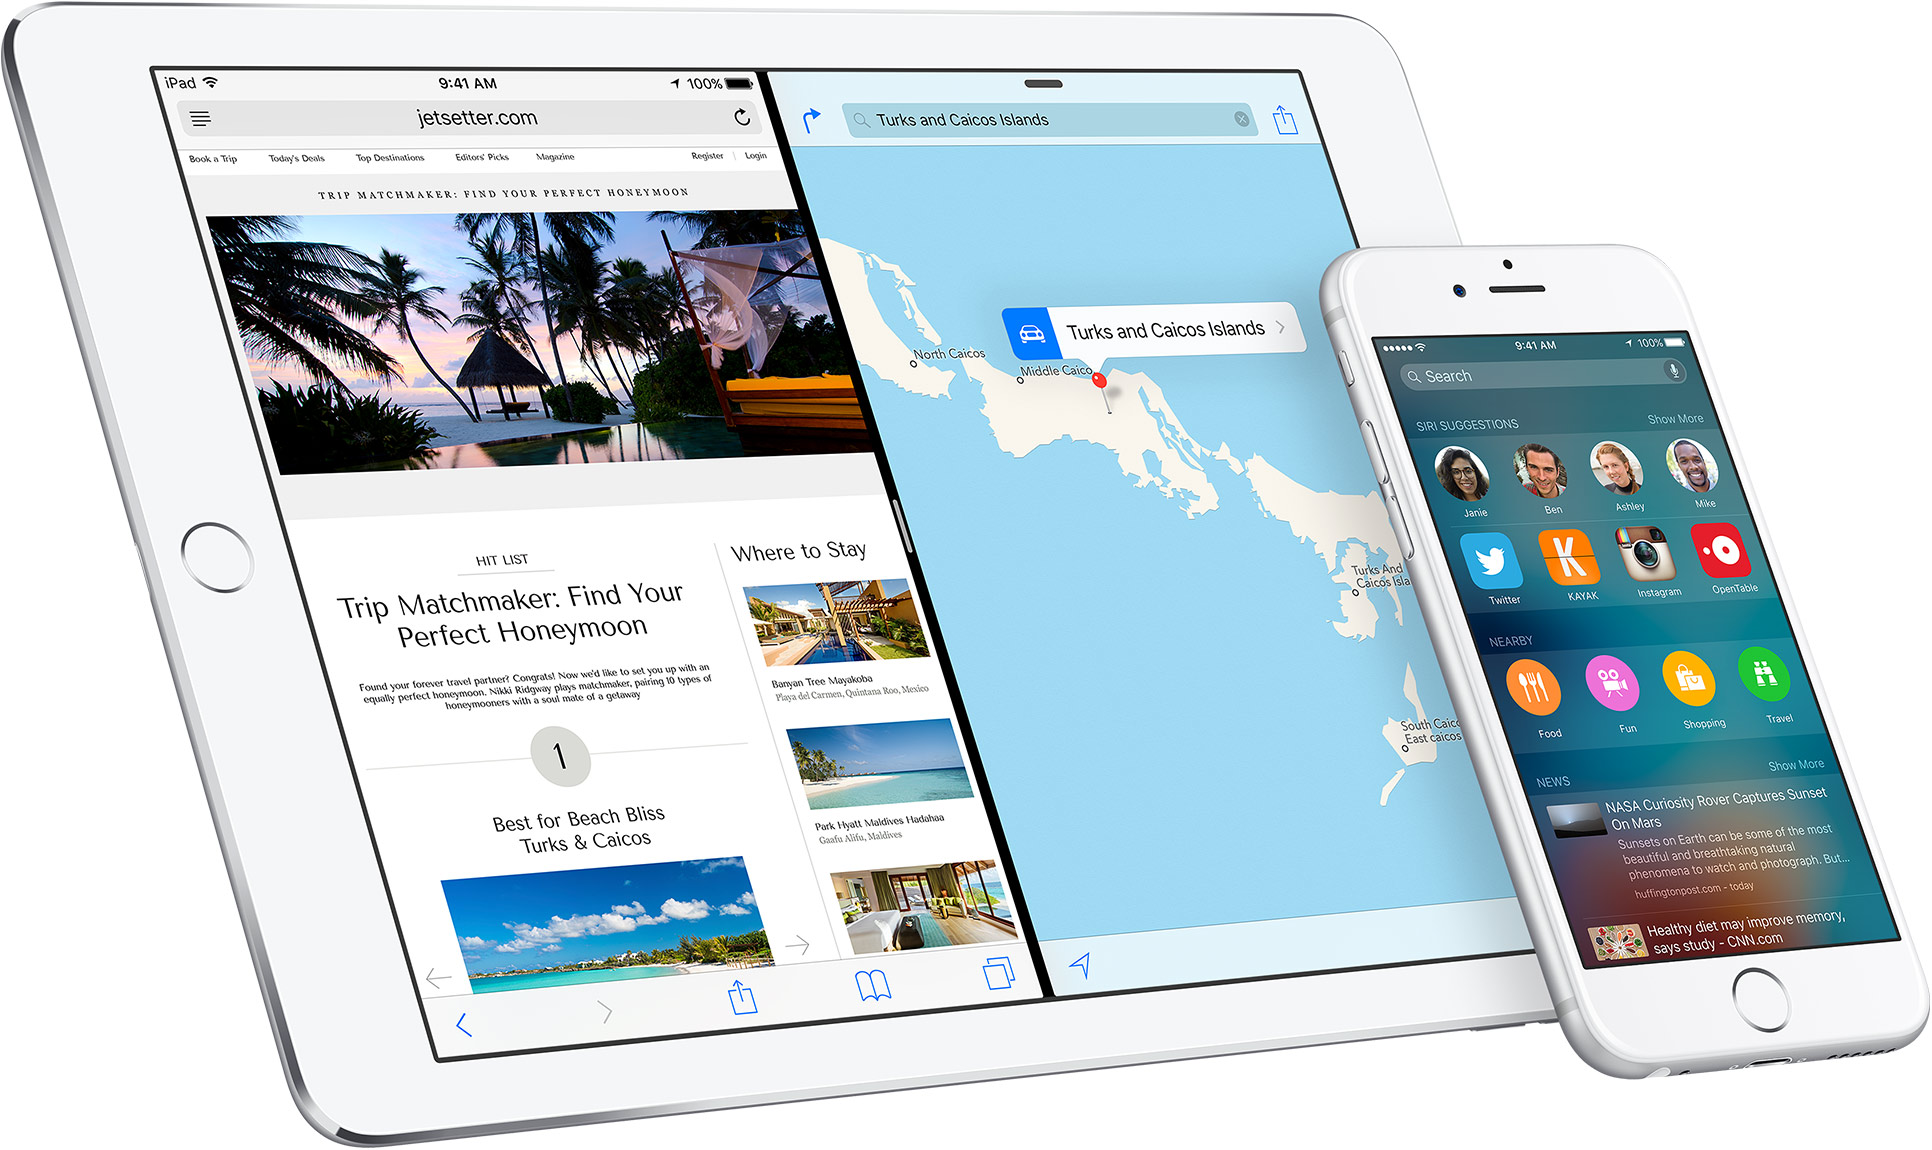 iOS-9-teaser-iPhone-iPad-imagae-002